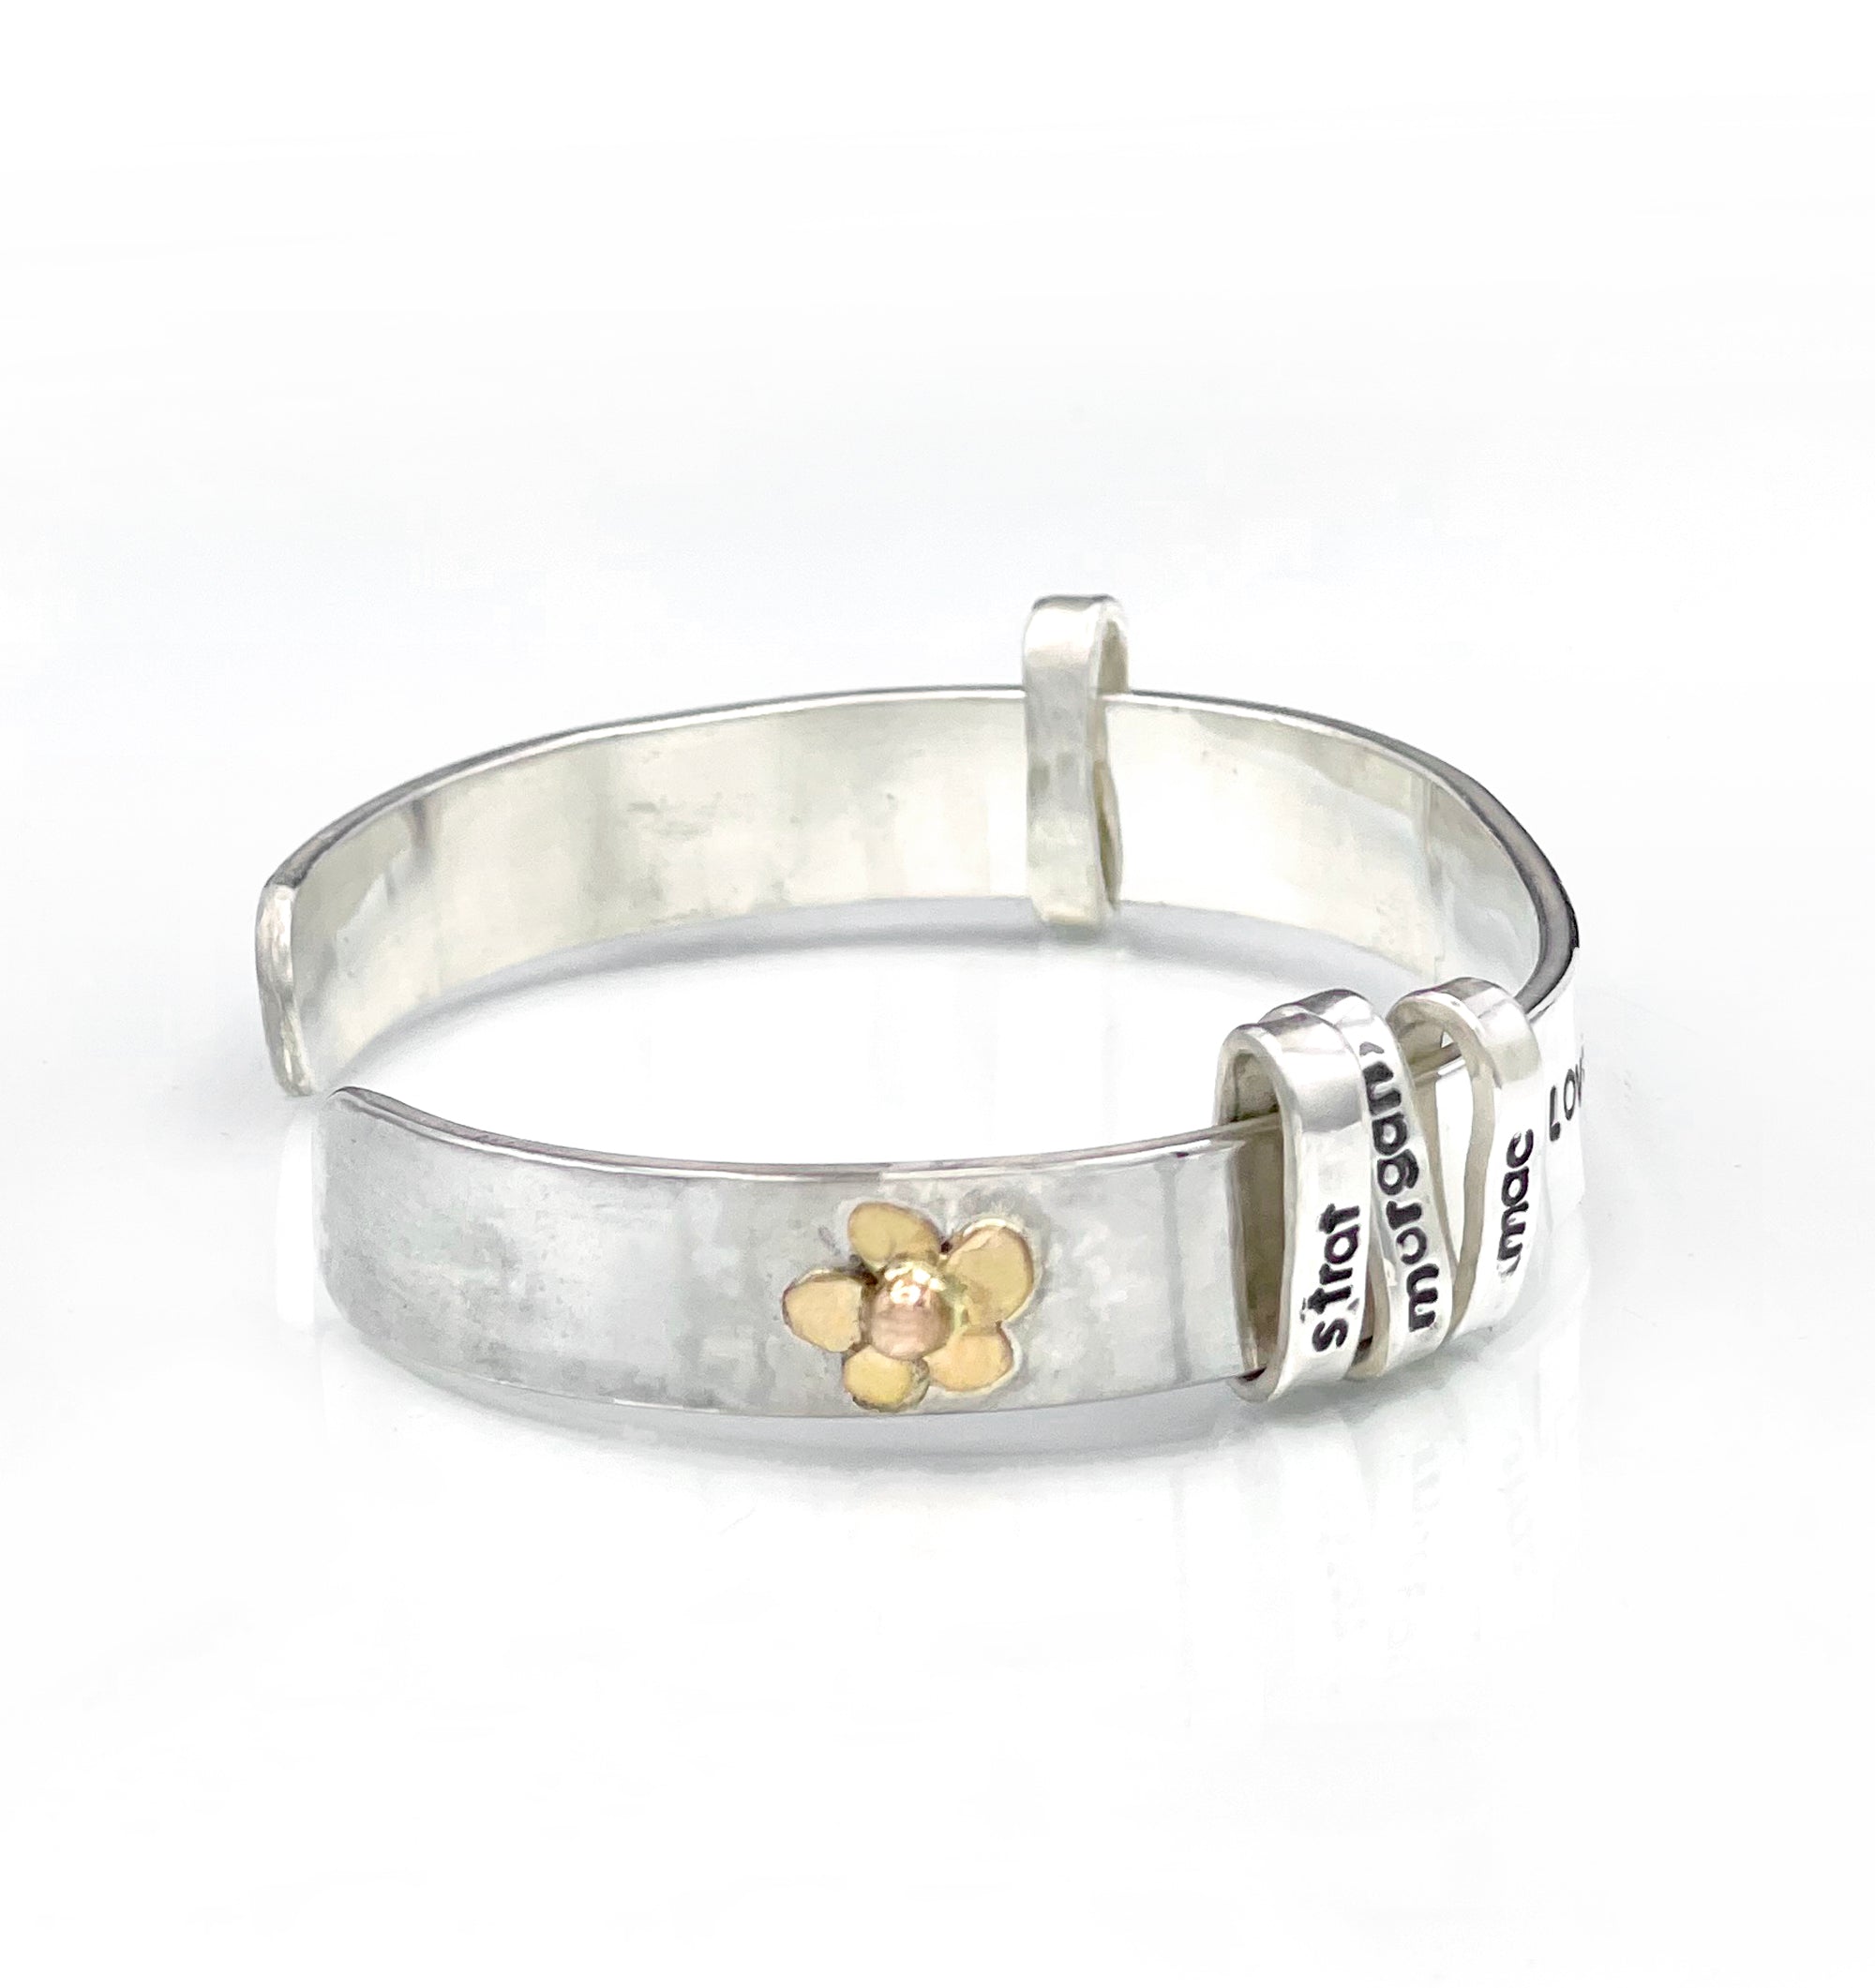 A Mothers Garden Personalized Cuff Bracelet